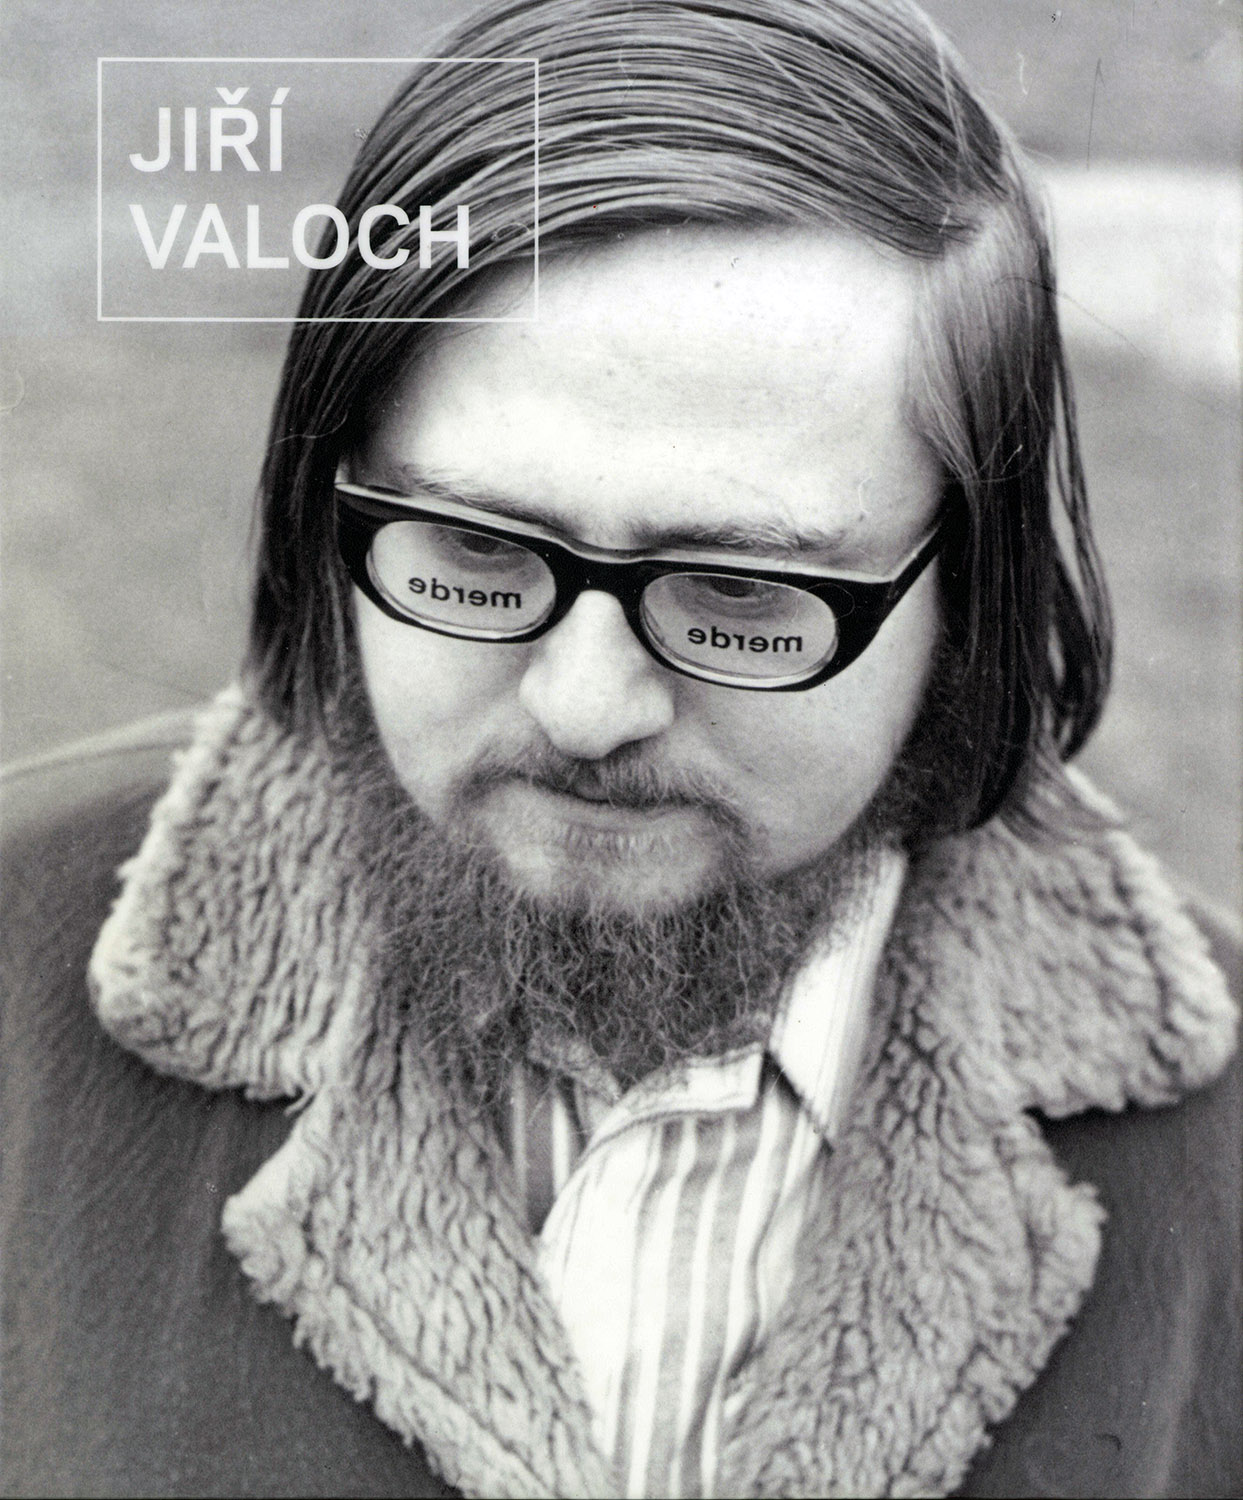 Jiří Valoch